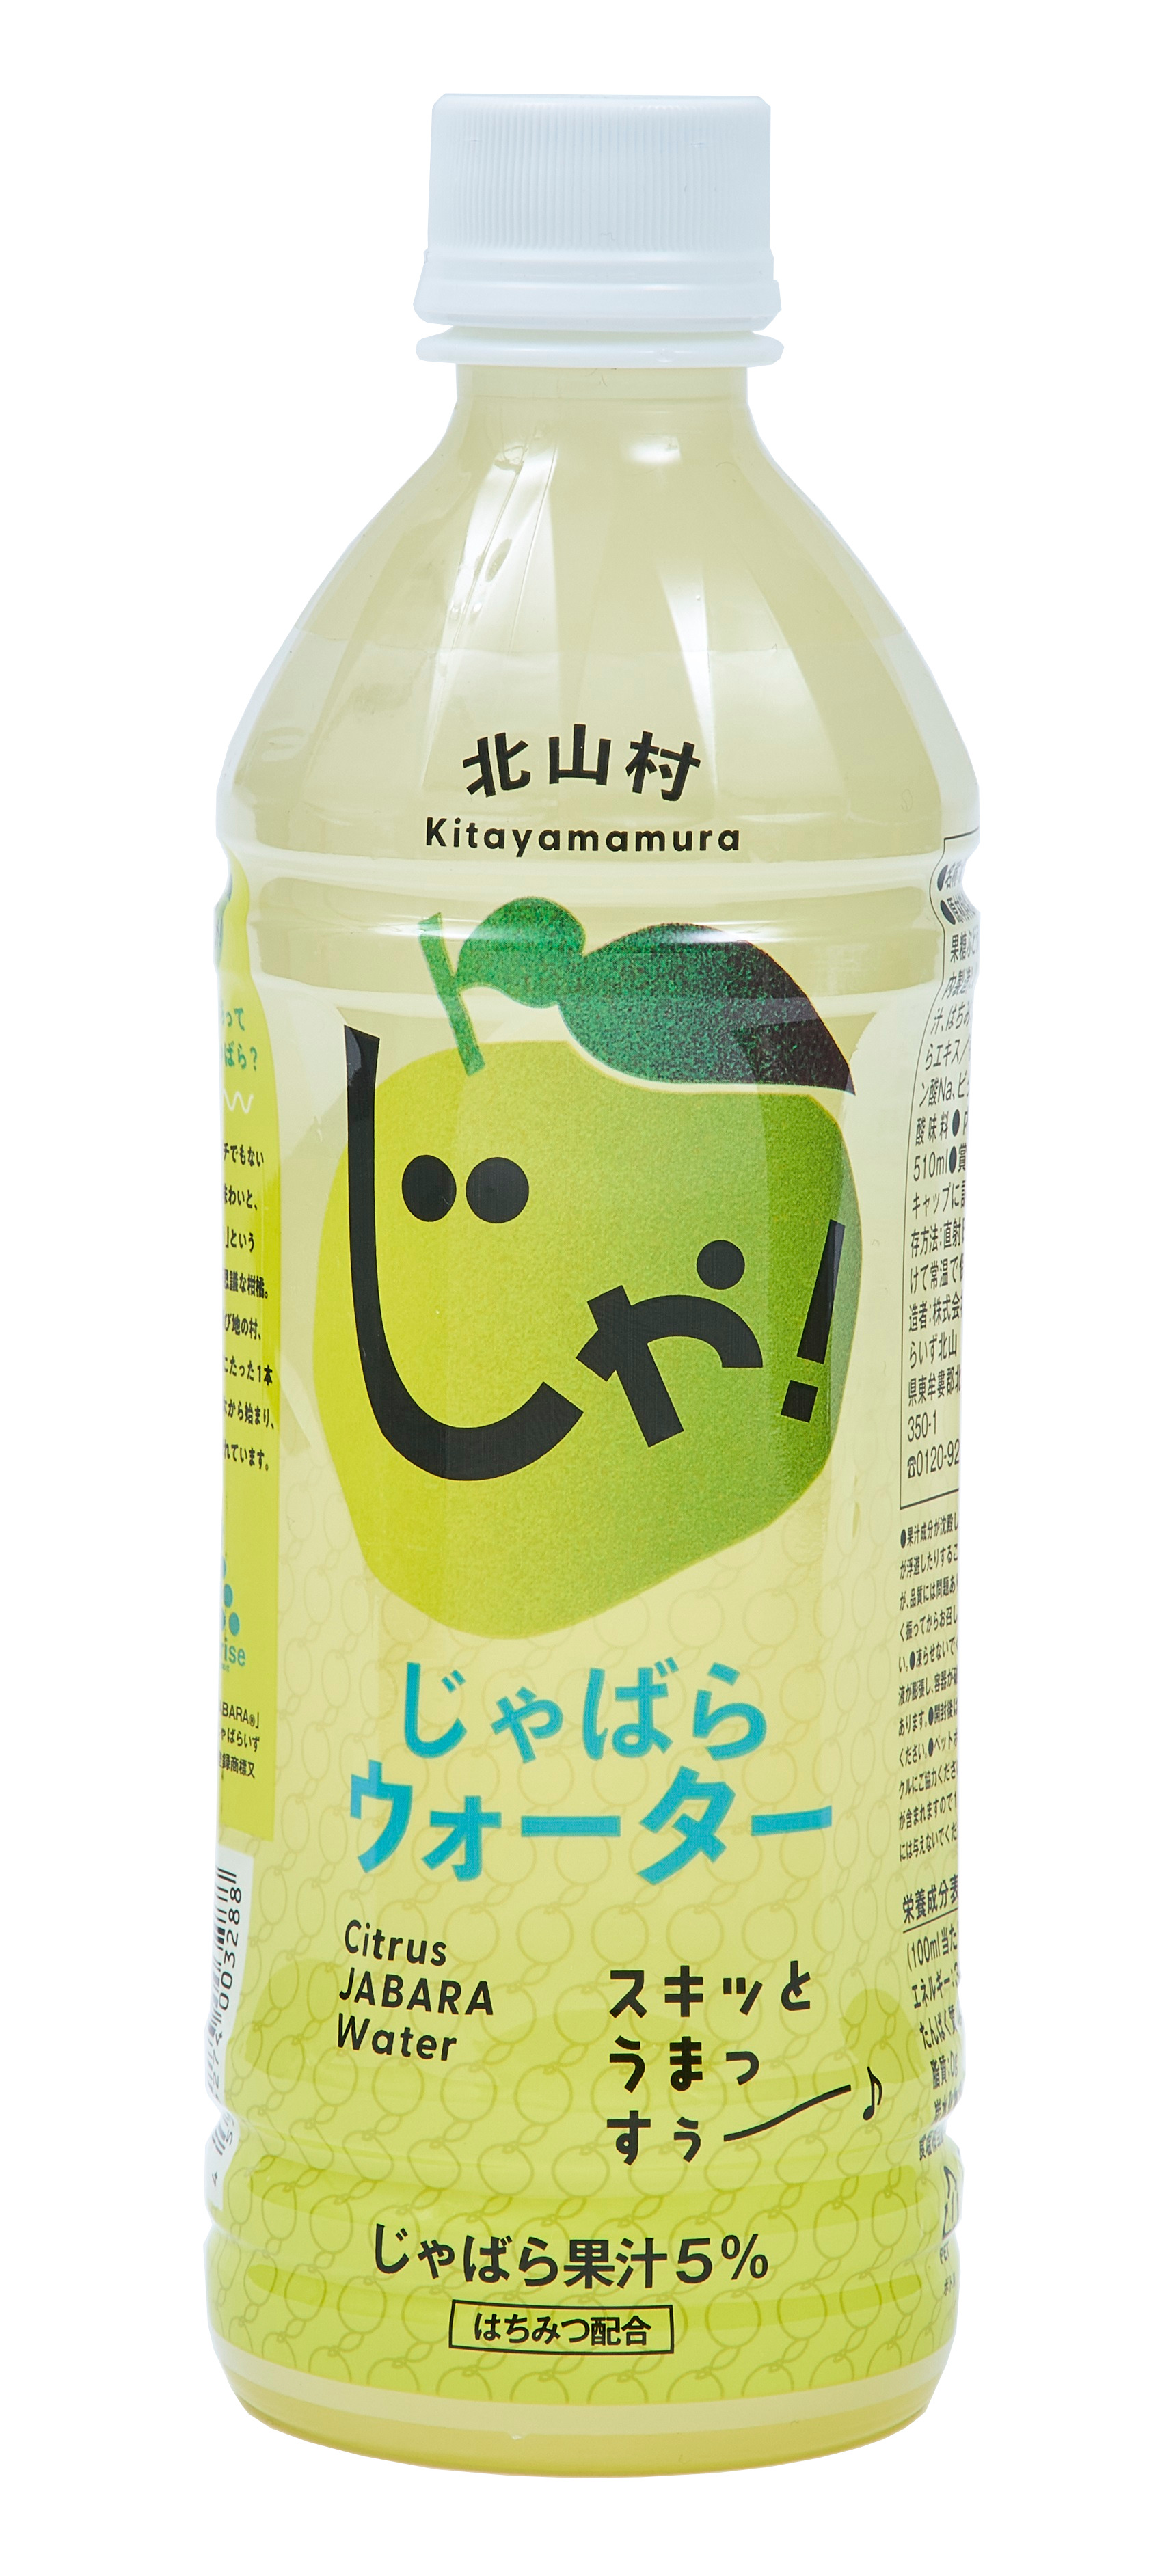 JABARA Citrus Juice 510ml